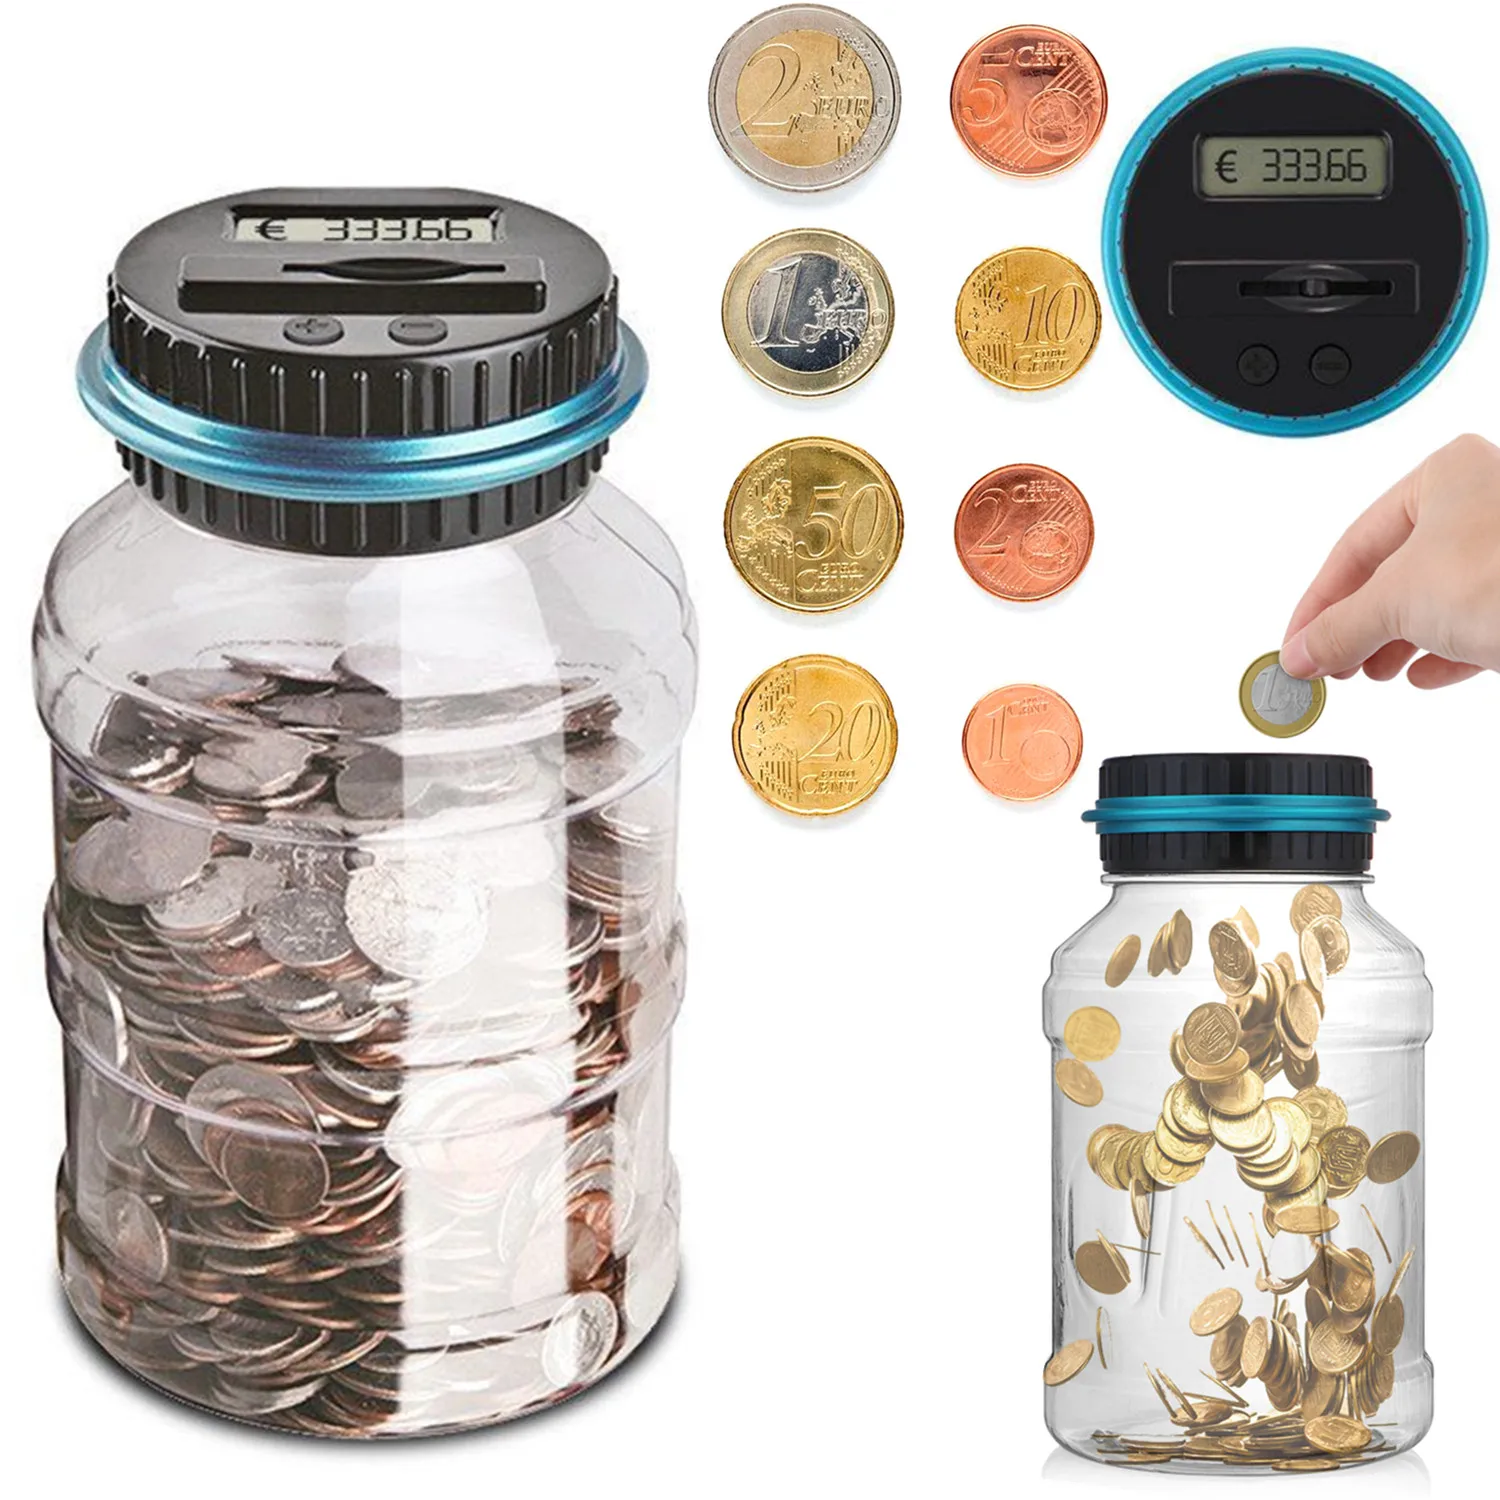 Coin Piggy Bank Saving Jar,Counter money jar,Digital Coin Counter with LCD Display Large Capacity Money Saving Box for EUR 